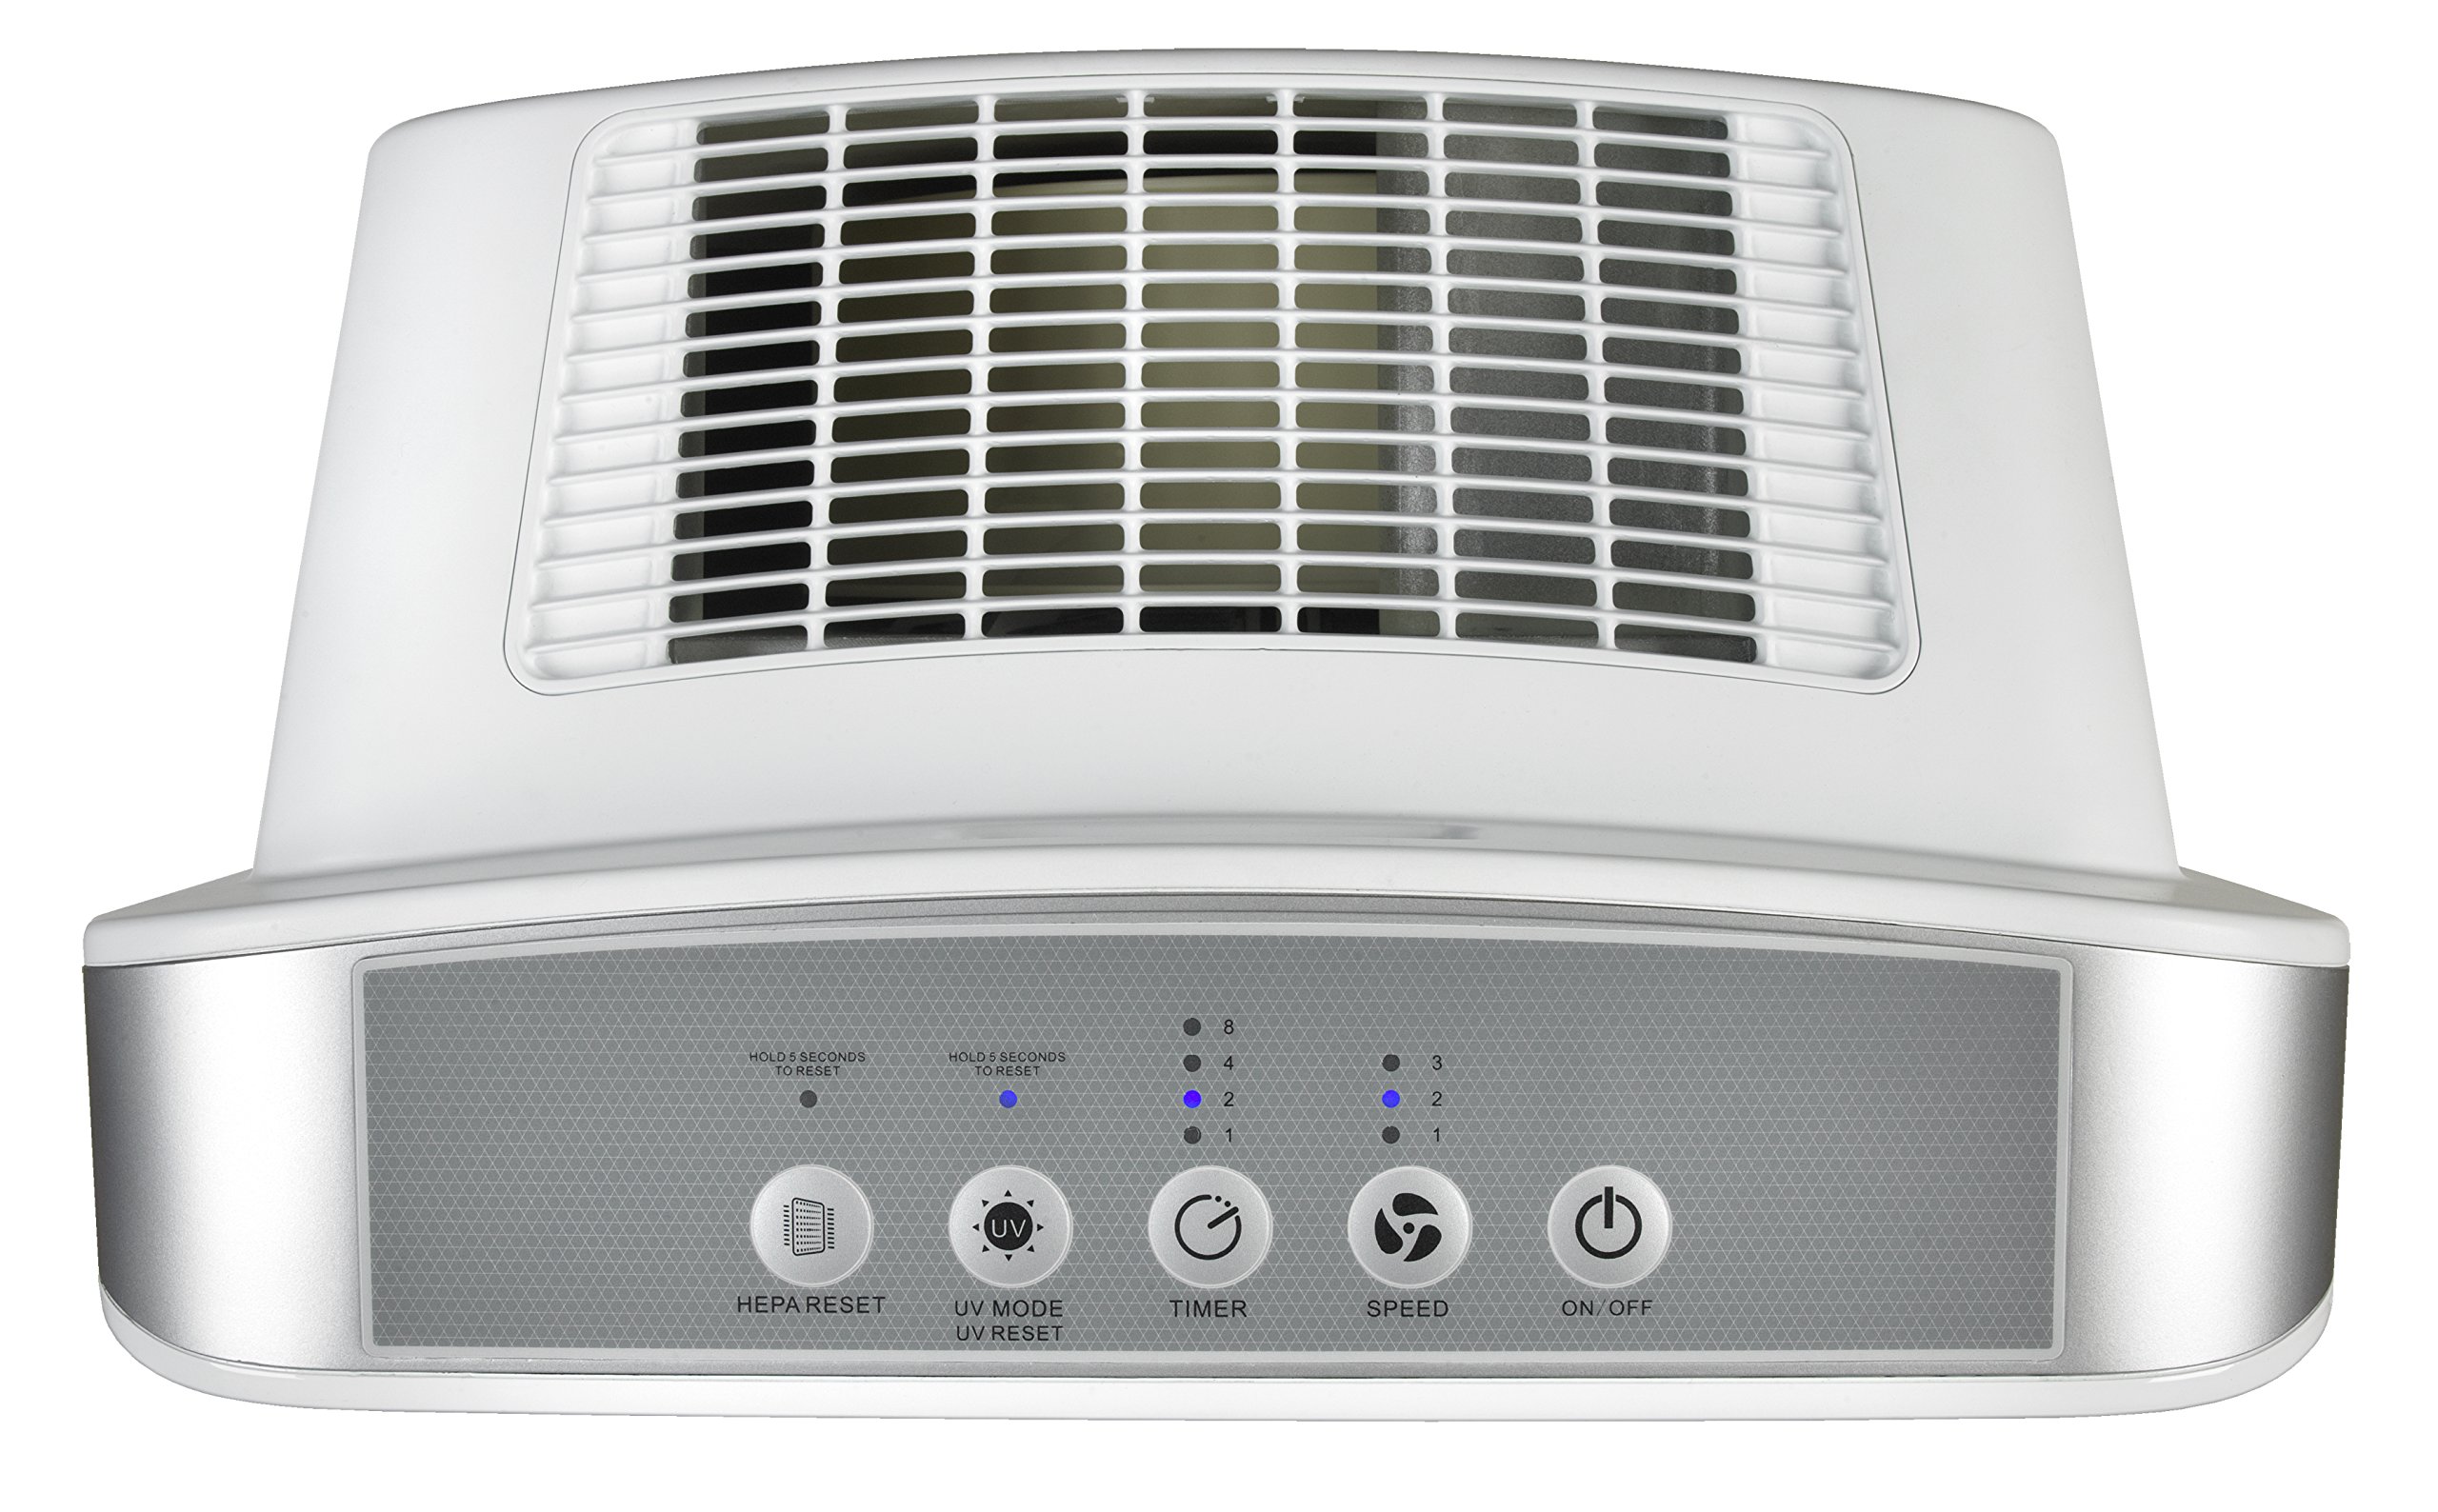 Germ Guardian AC5900WCA 21” 4-in-1 True HEPA Filter Air Purifier for Home, Large Rooms, UV-C Sanitizer, Filters Allergies, Smoke, Dust, Pet Dander, & Odors, 3-Yr Wty, GermGuardian, White